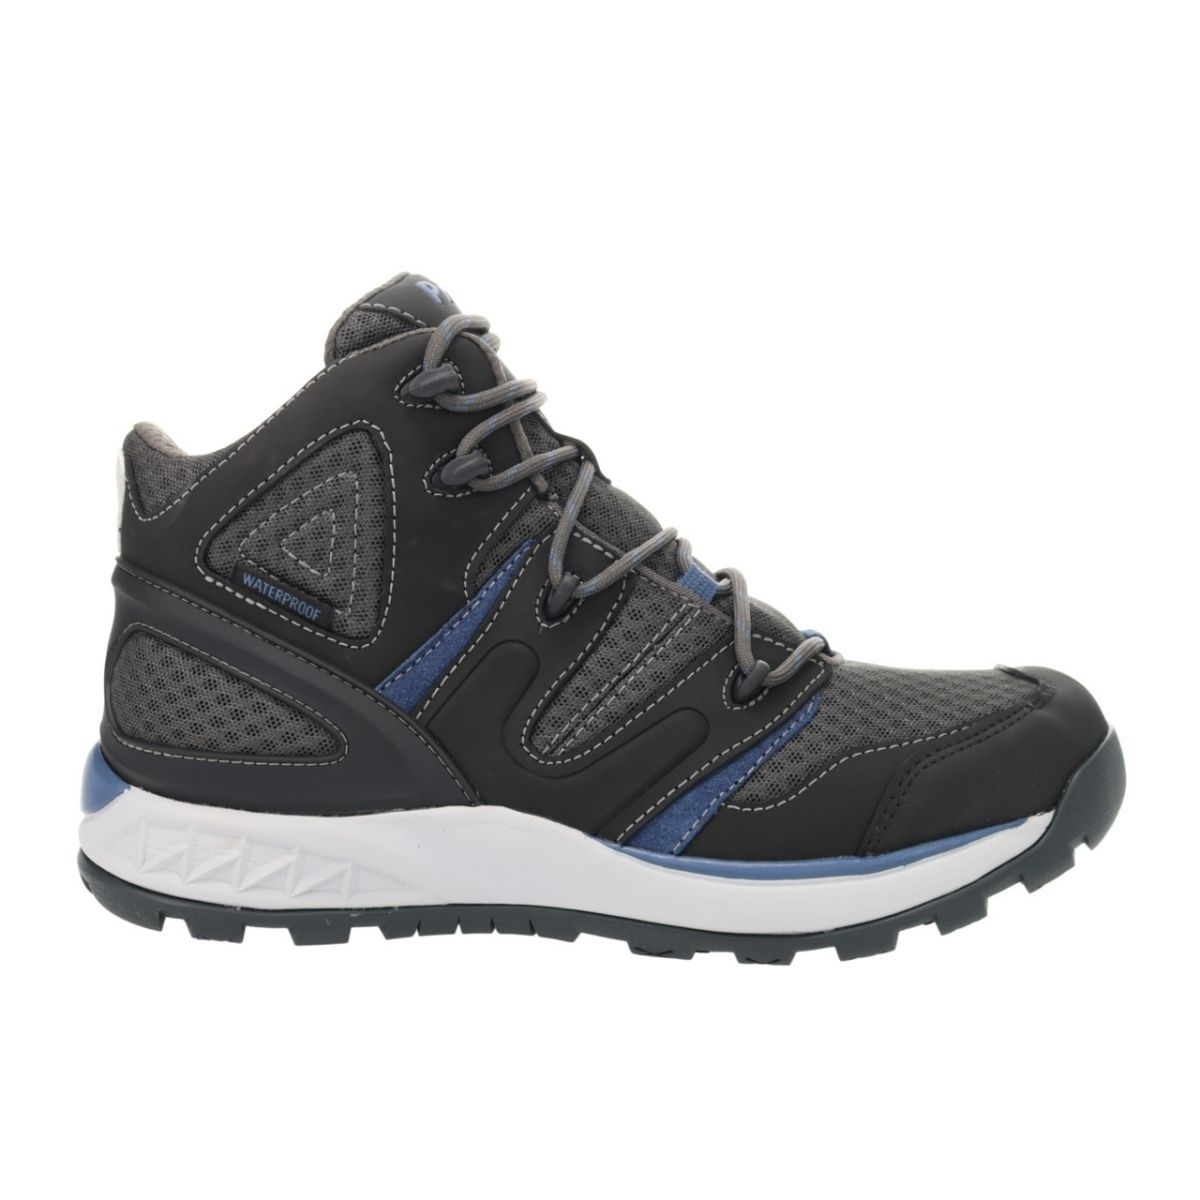 Propet Men's Veymont Waterproof Hiking Boot Grey/Blue - MOA022SGRB GREY/BLUE - GREY/BLUE, 15